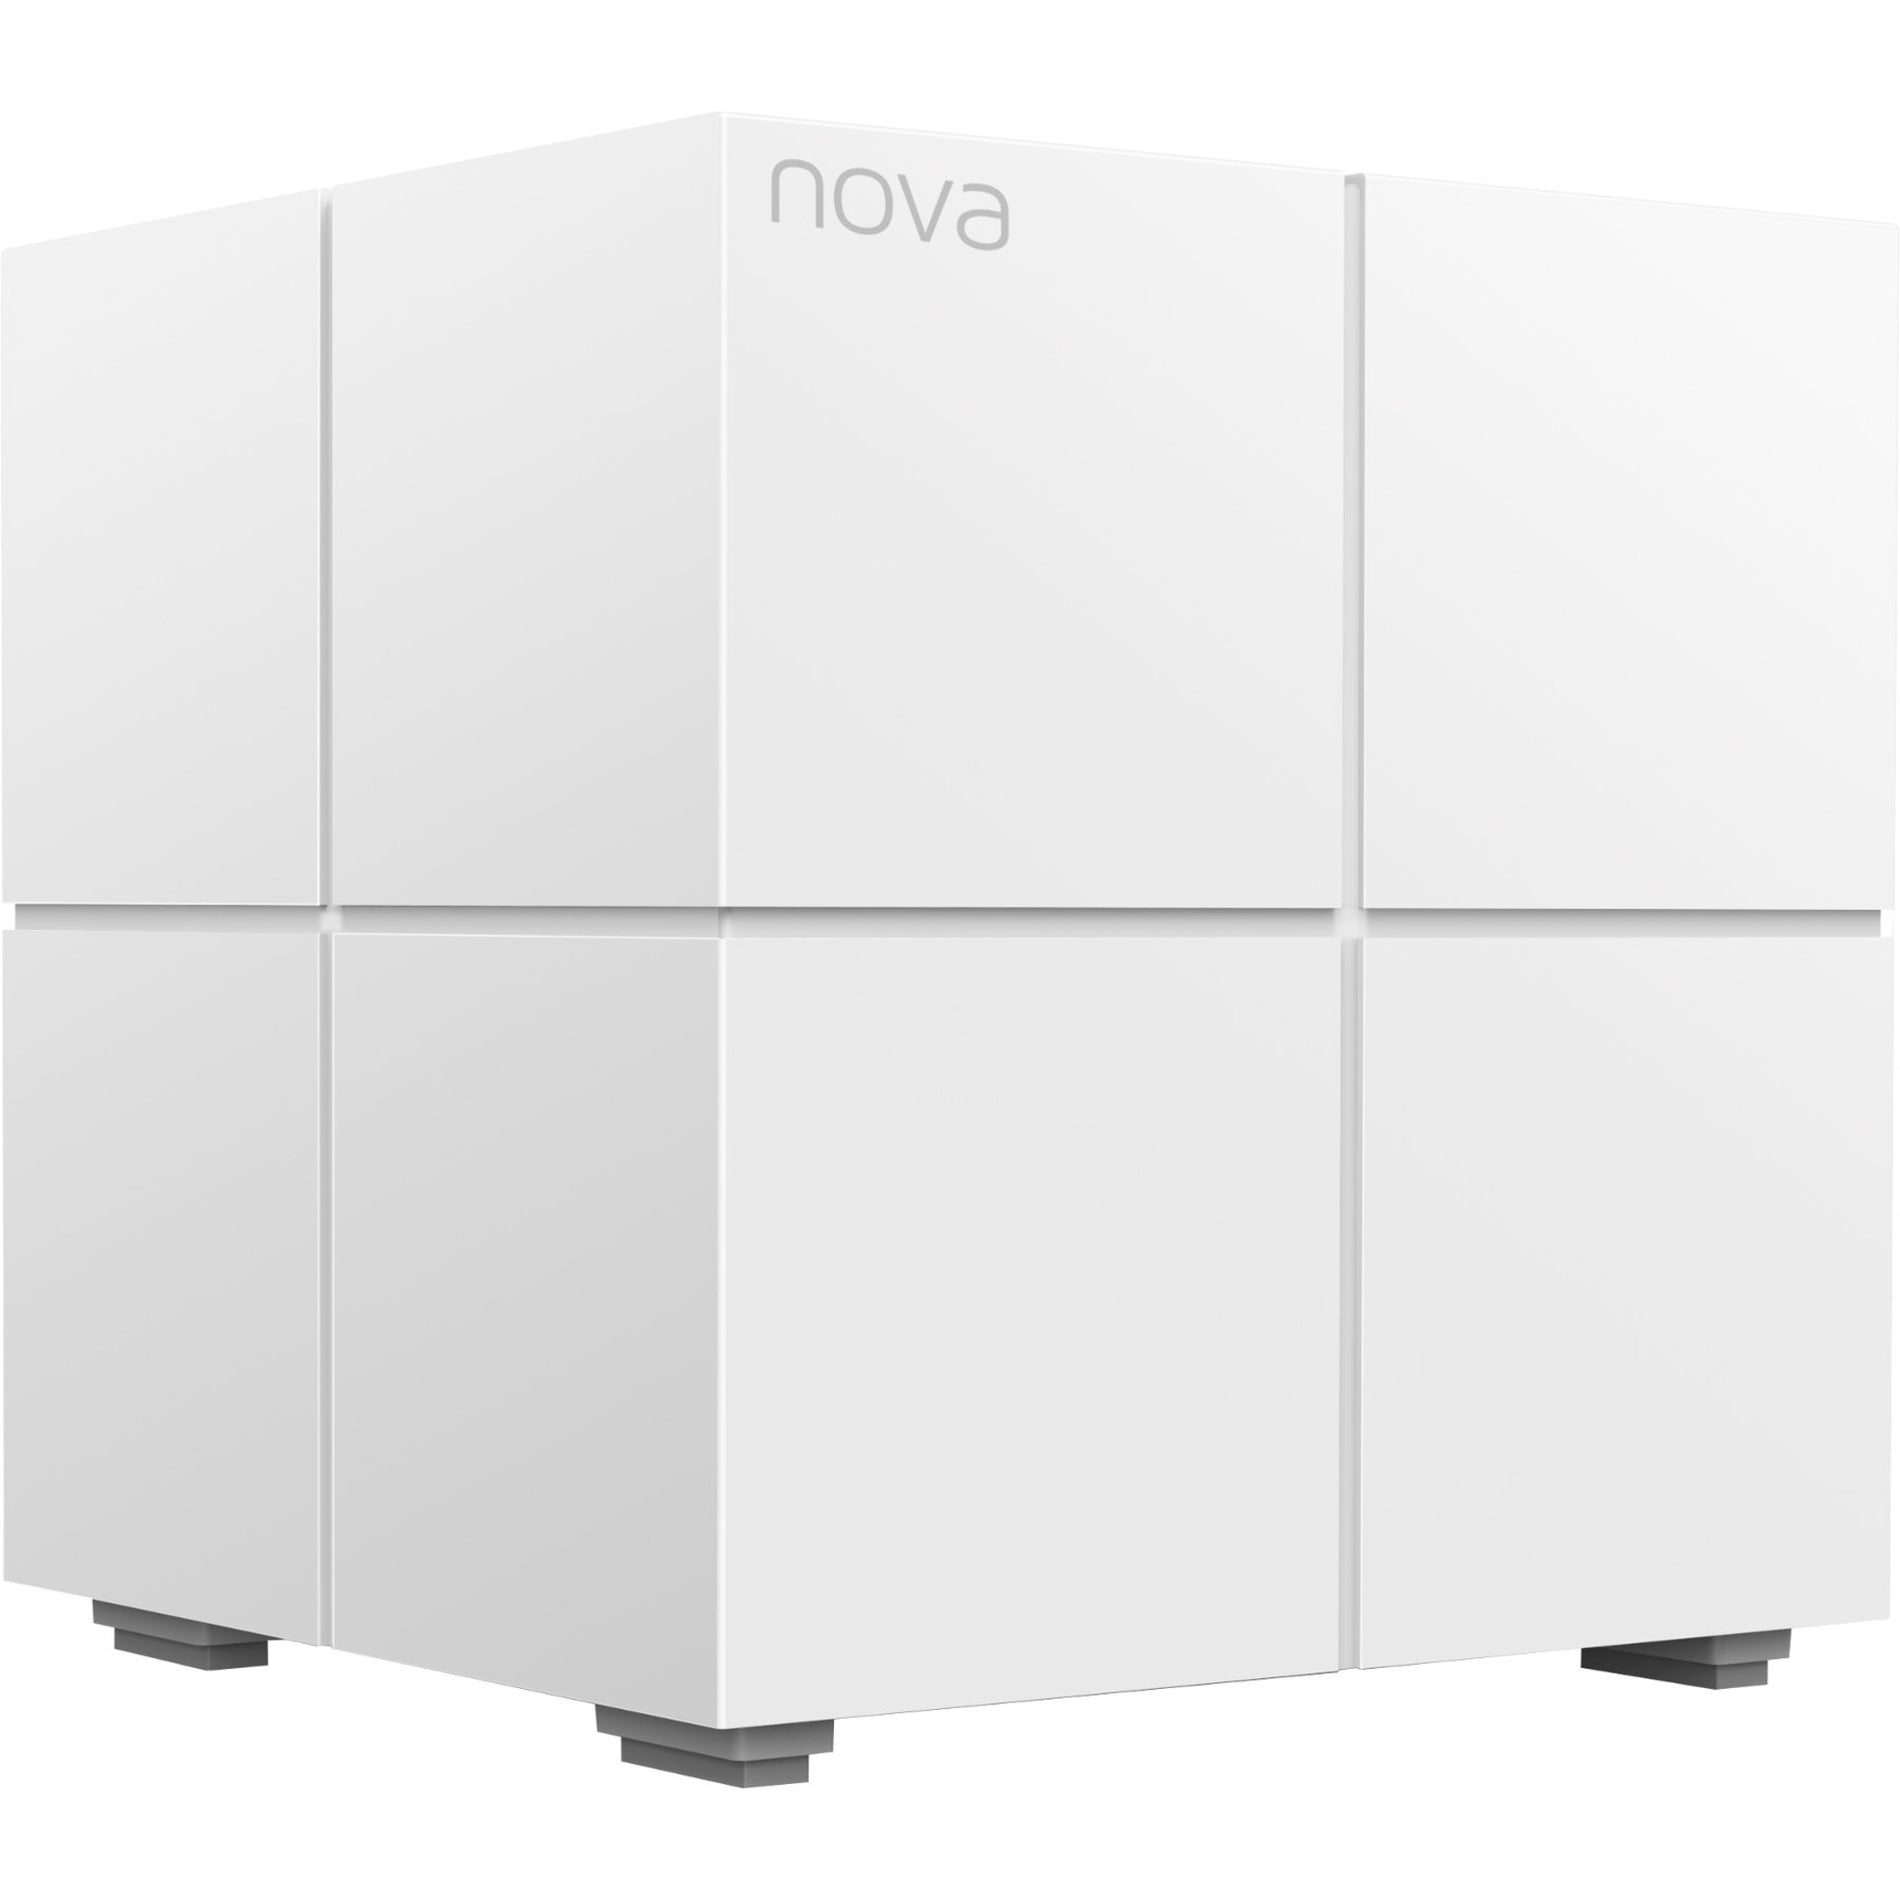 Tenda NOVAMW6(1-PACK) Nova Whole Home Mesh WiFi System, Gigabit Ethernet, 2.4 GHz/5 GHz, 1.17 Gbit/s